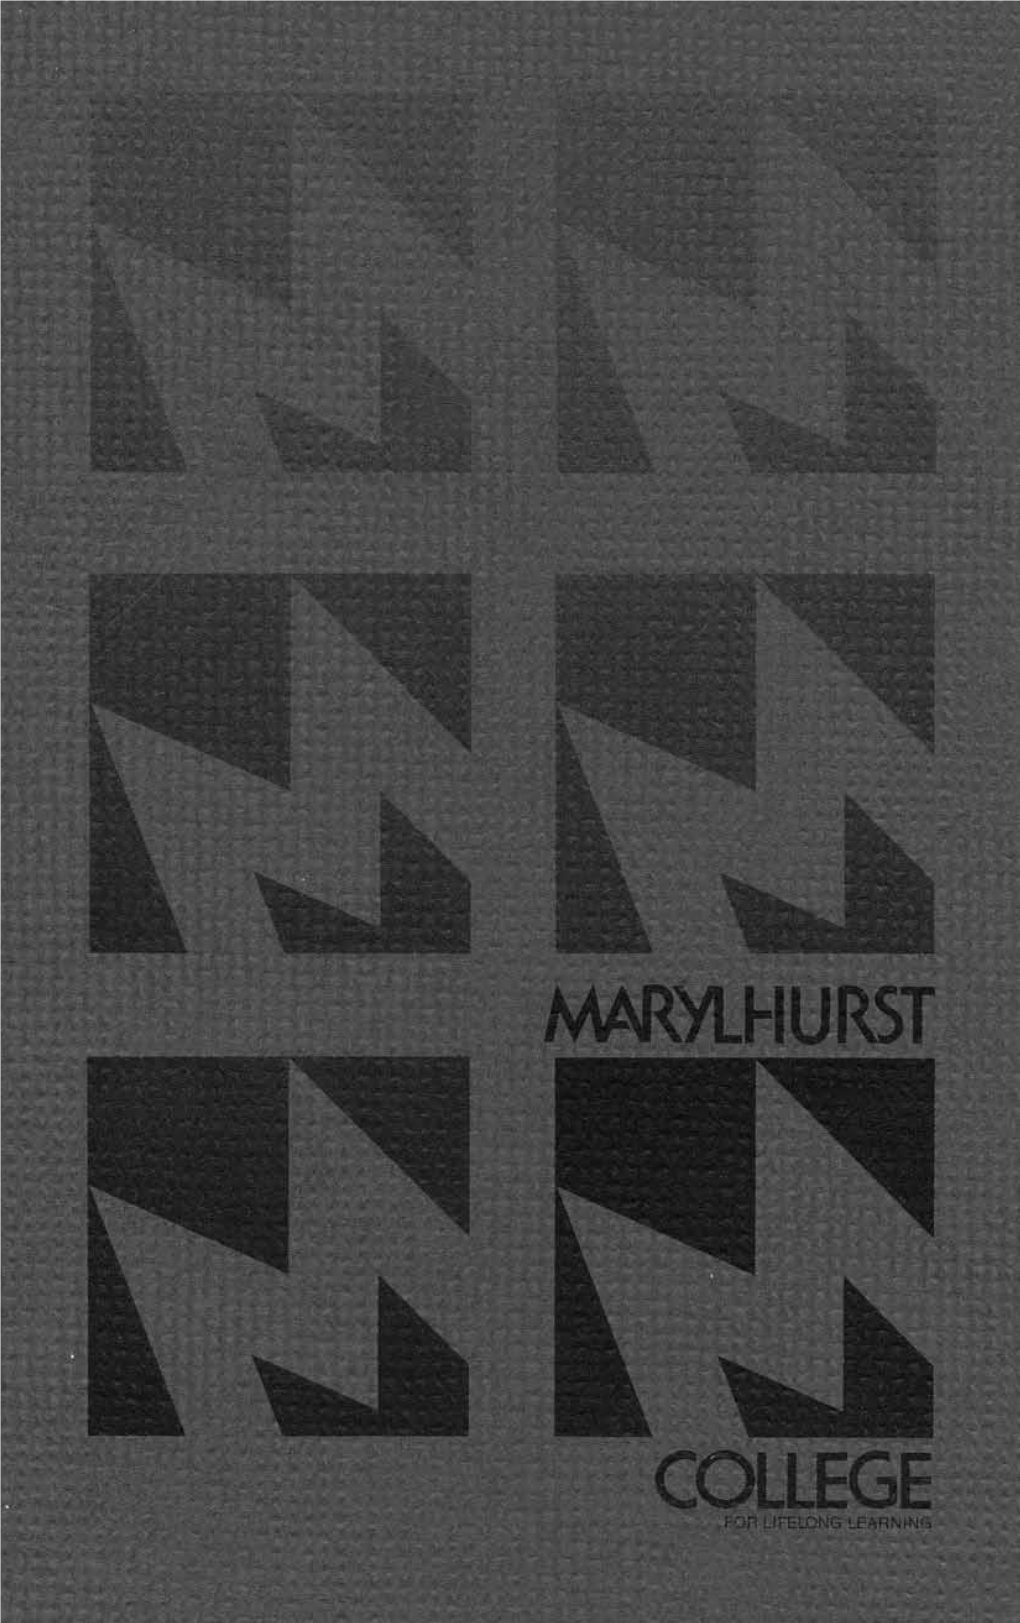 1982-84 Marylhurst College Catalog